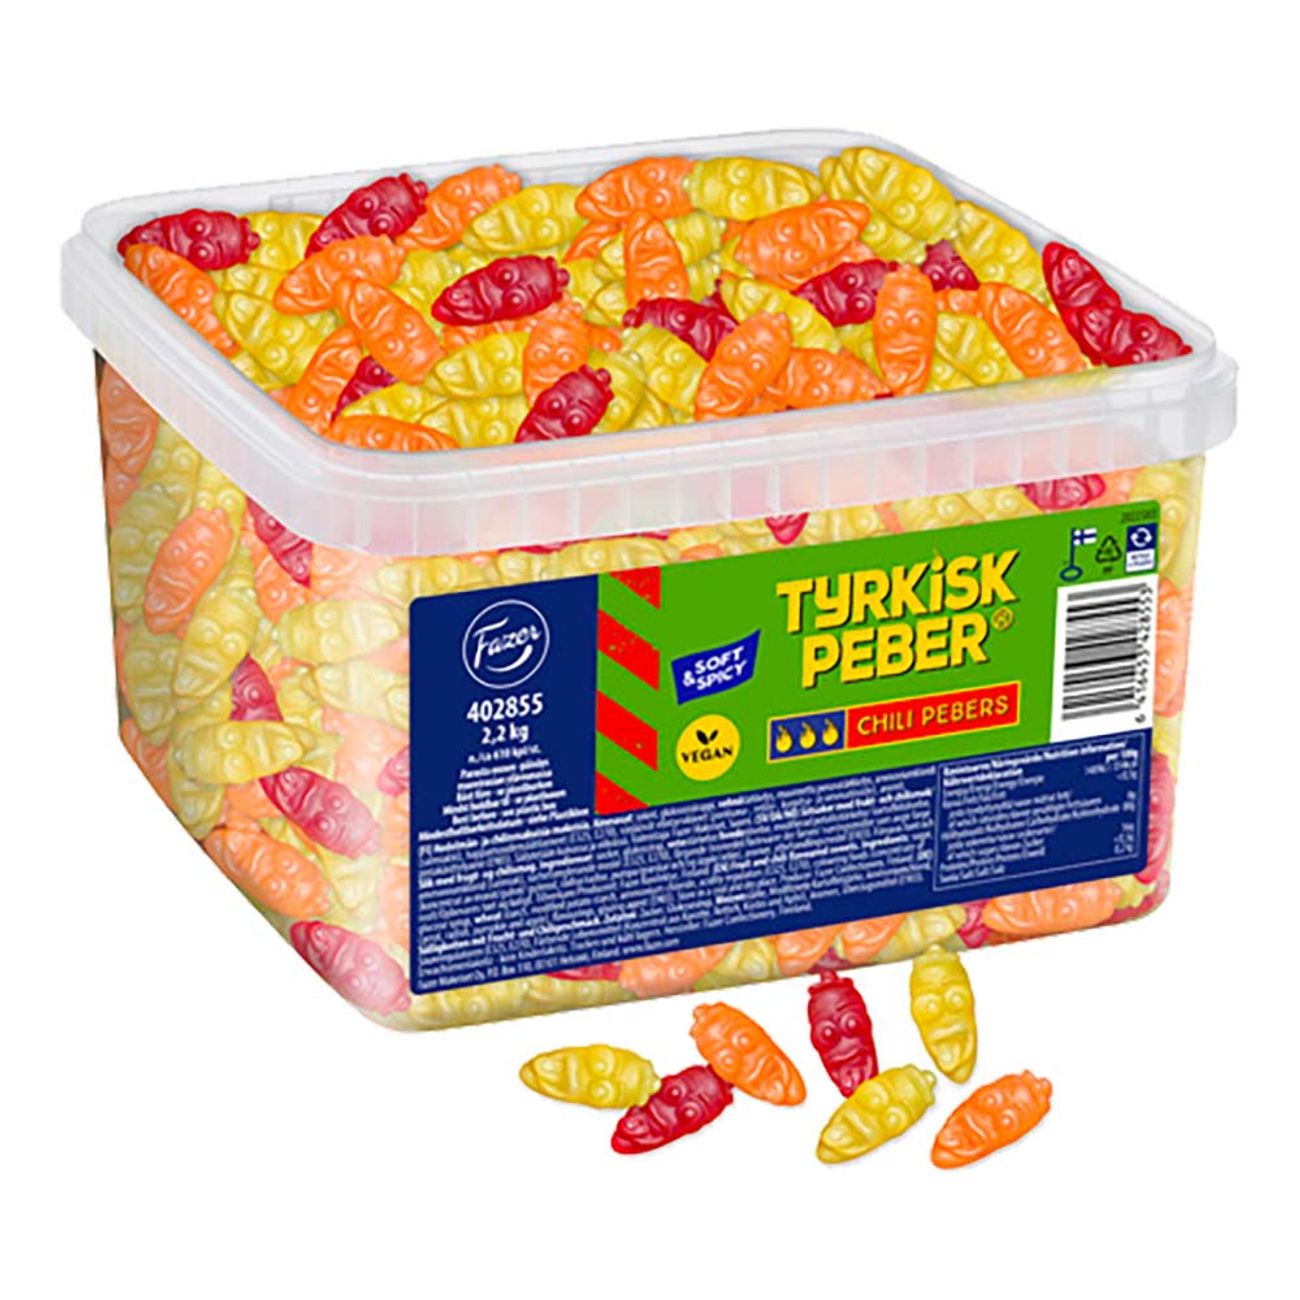 tyrkisk-peber-chili-pebers-storpack-94884-1